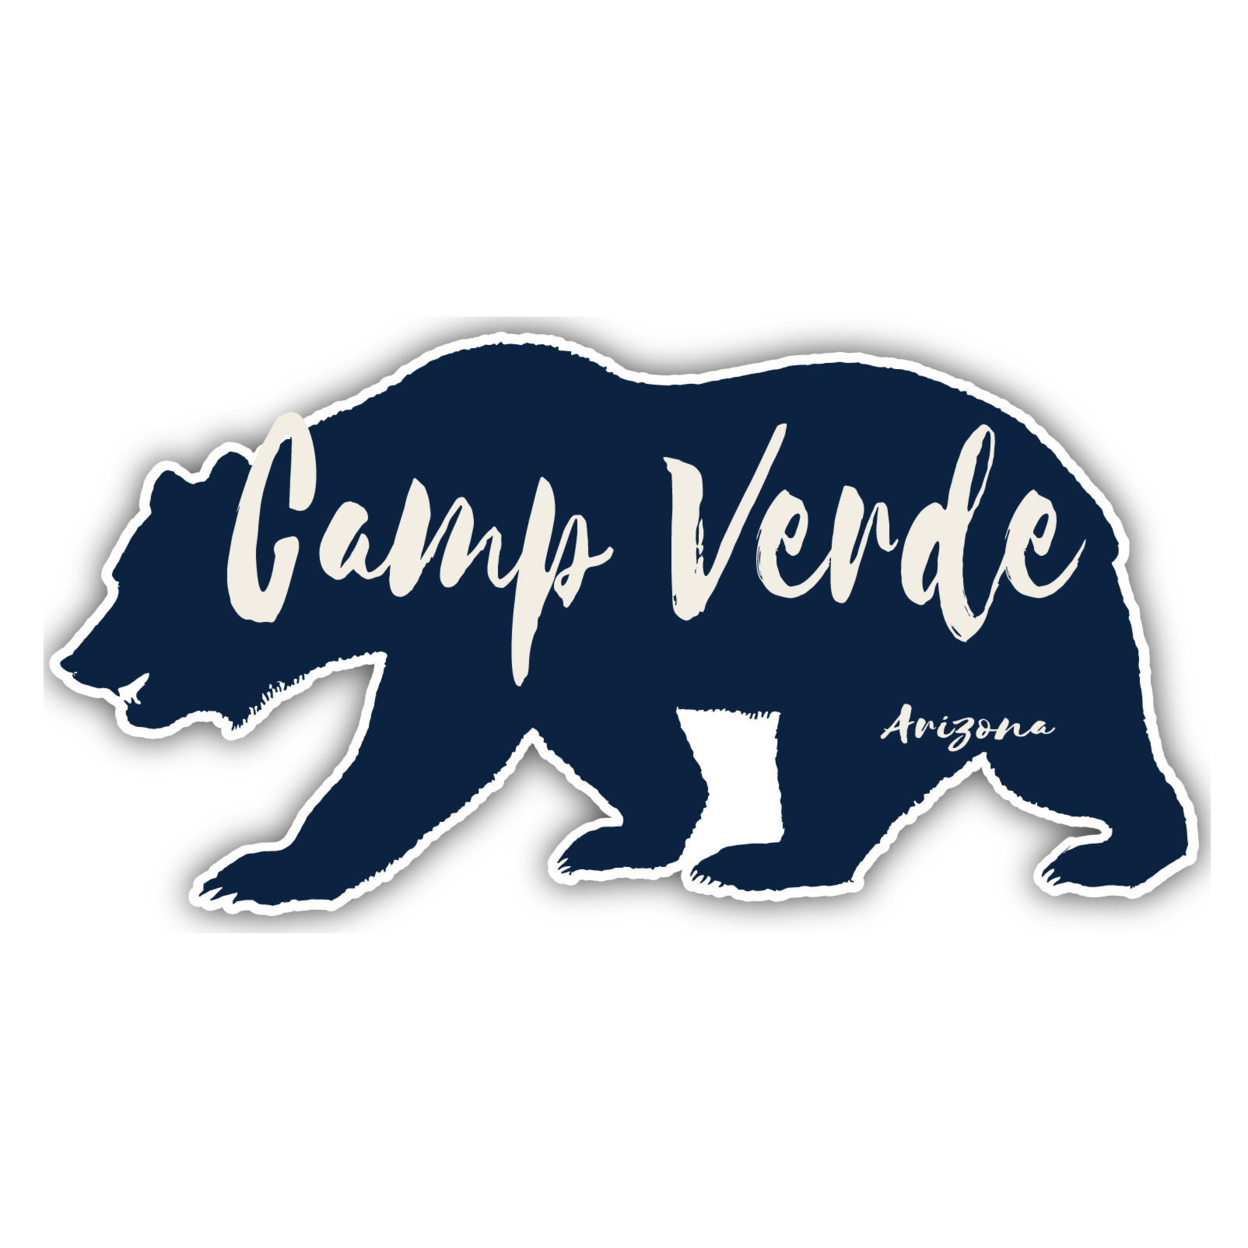 Camp Verde Arizona Souvenir Decorative Stickers (Choose Theme And Size) - 4-Pack, 6-Inch, Bear